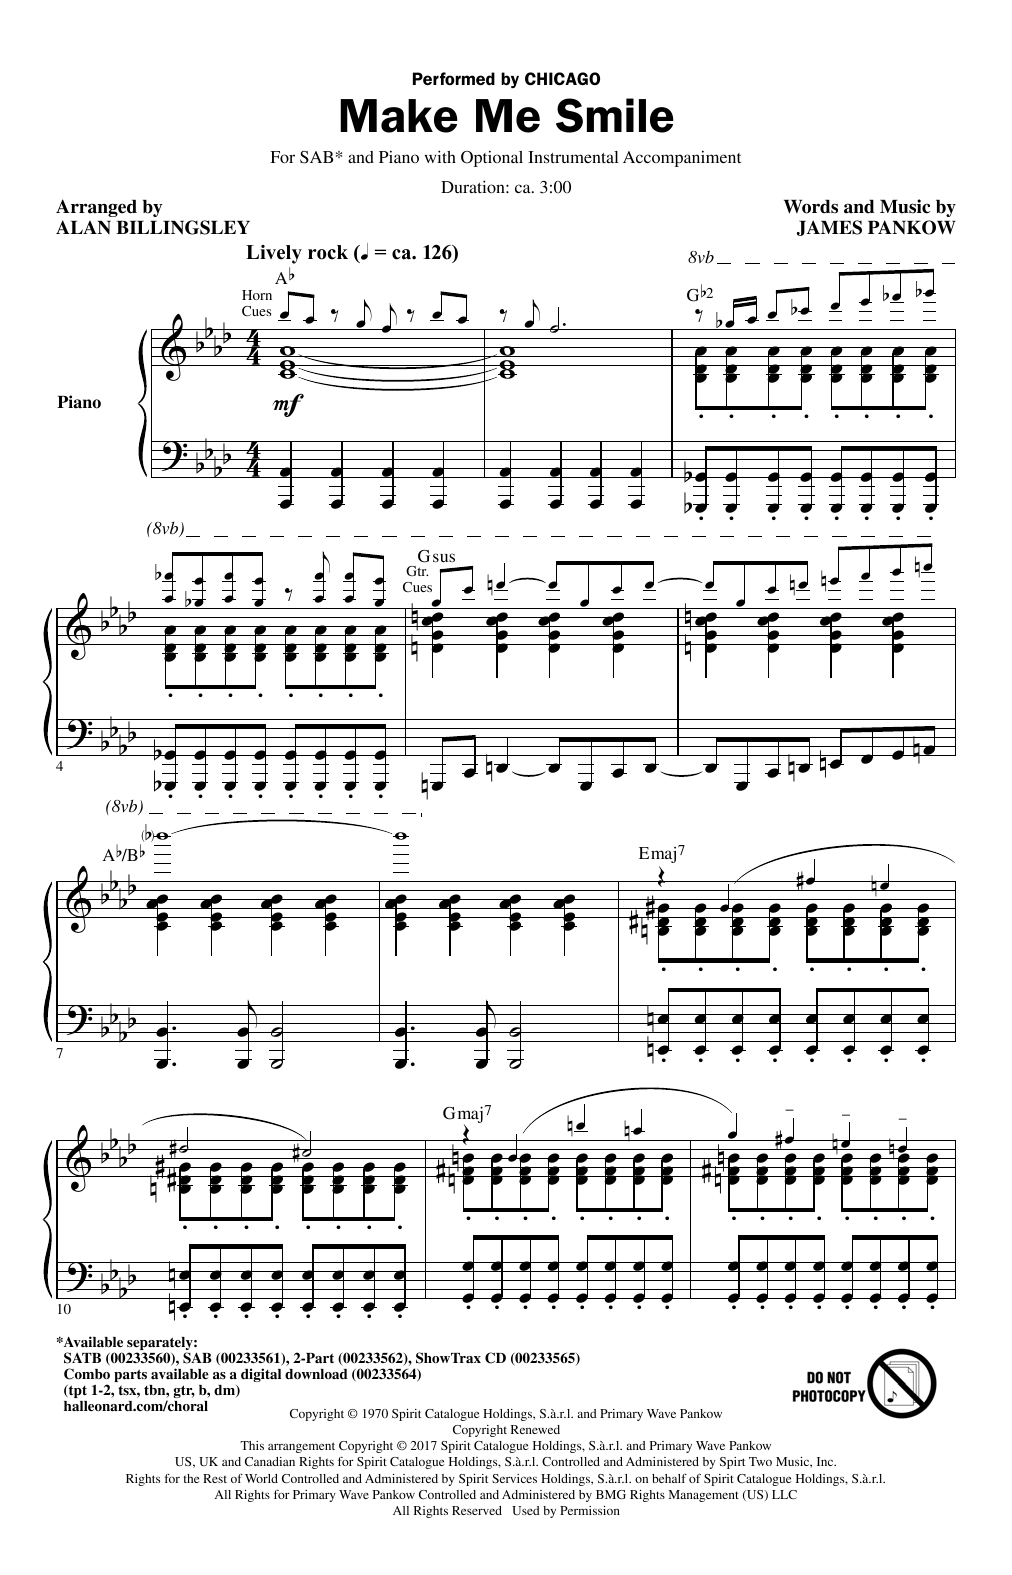 Alan Billingsley Make Me Smile Sheet Music Notes & Chords for SATB - Download or Print PDF